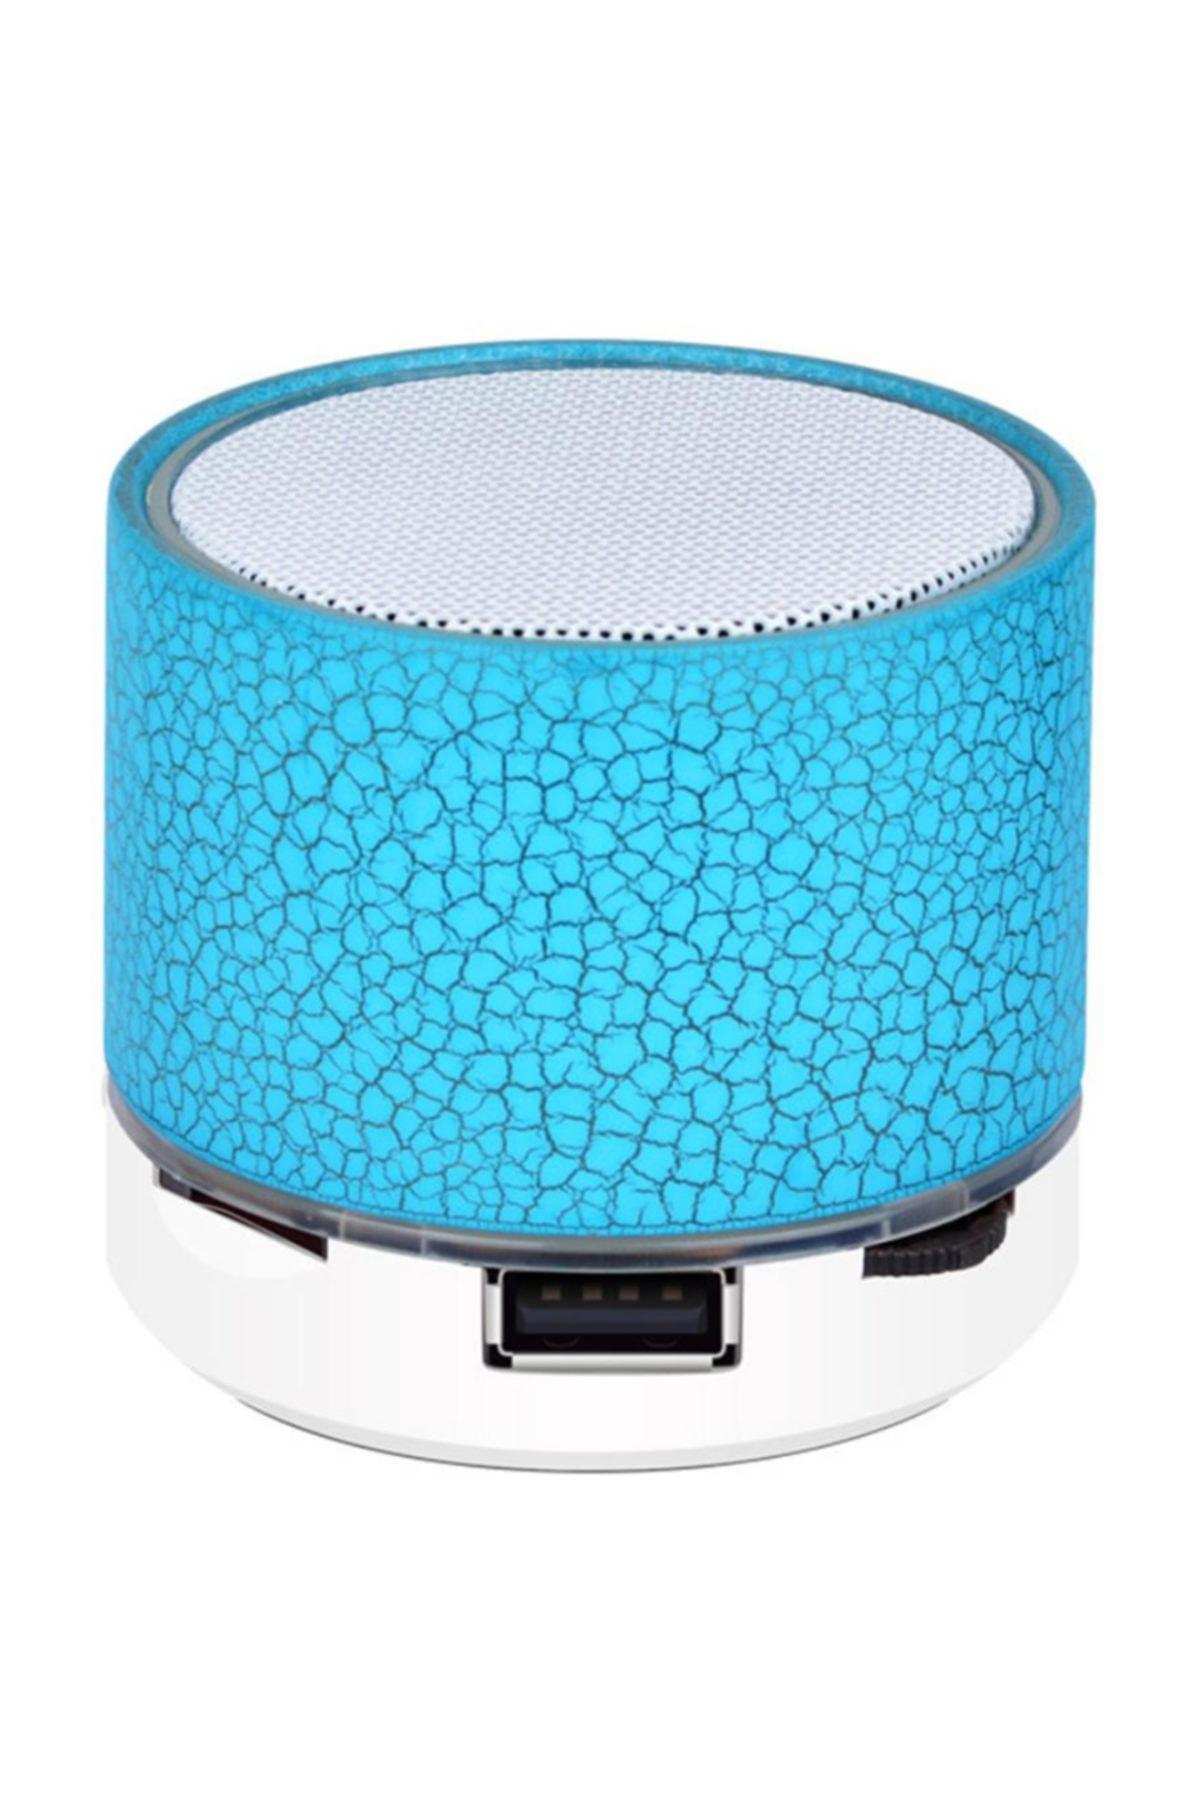 Işıklı Bluetooth Mini Hoparlör Ses Bombası-Mavi